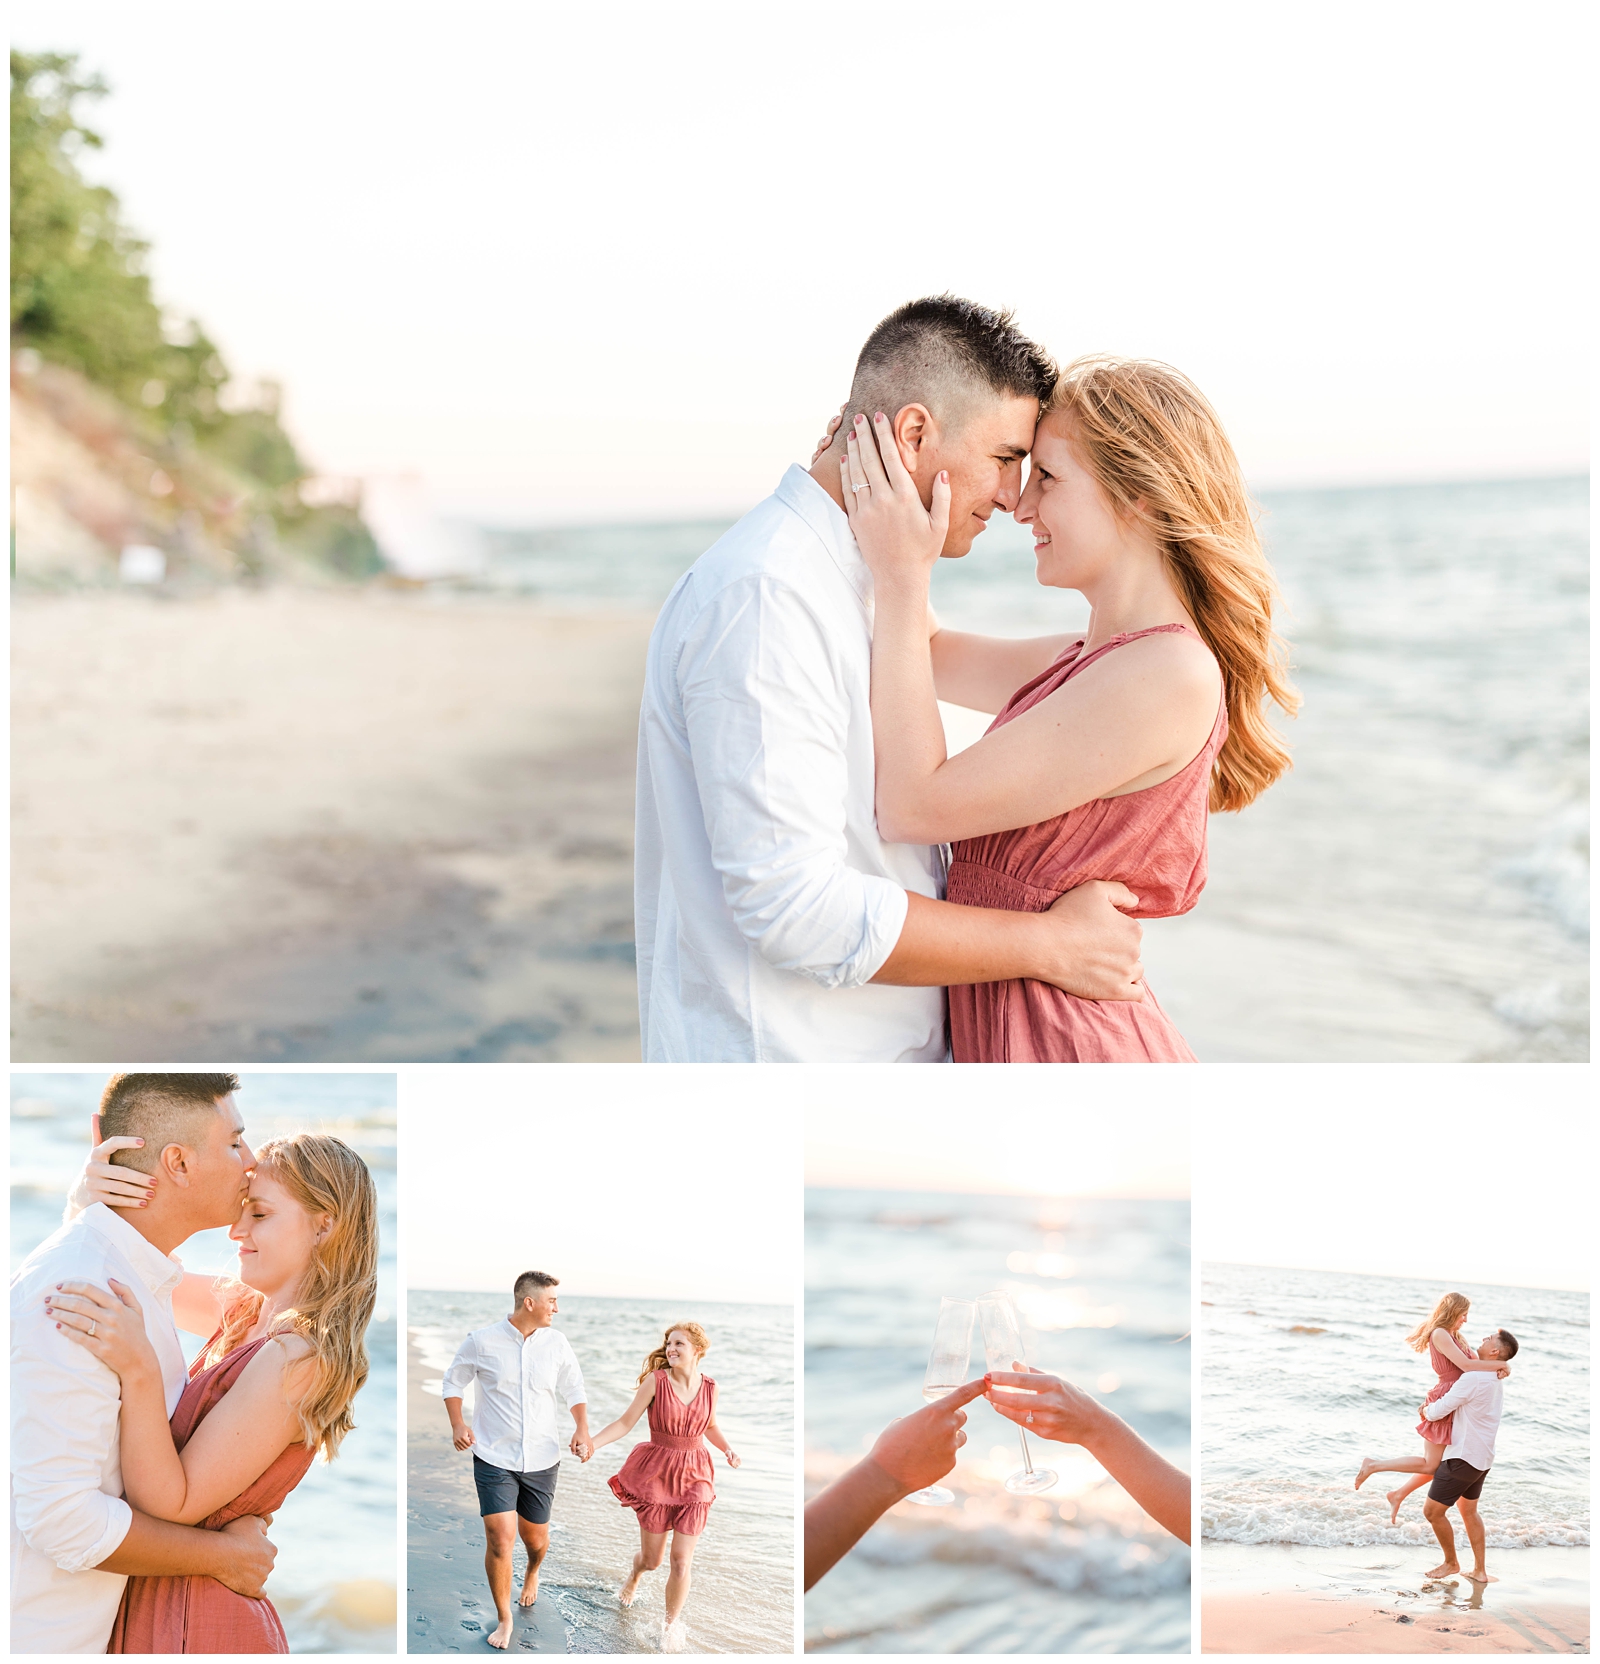 Engagement Photos on the beach